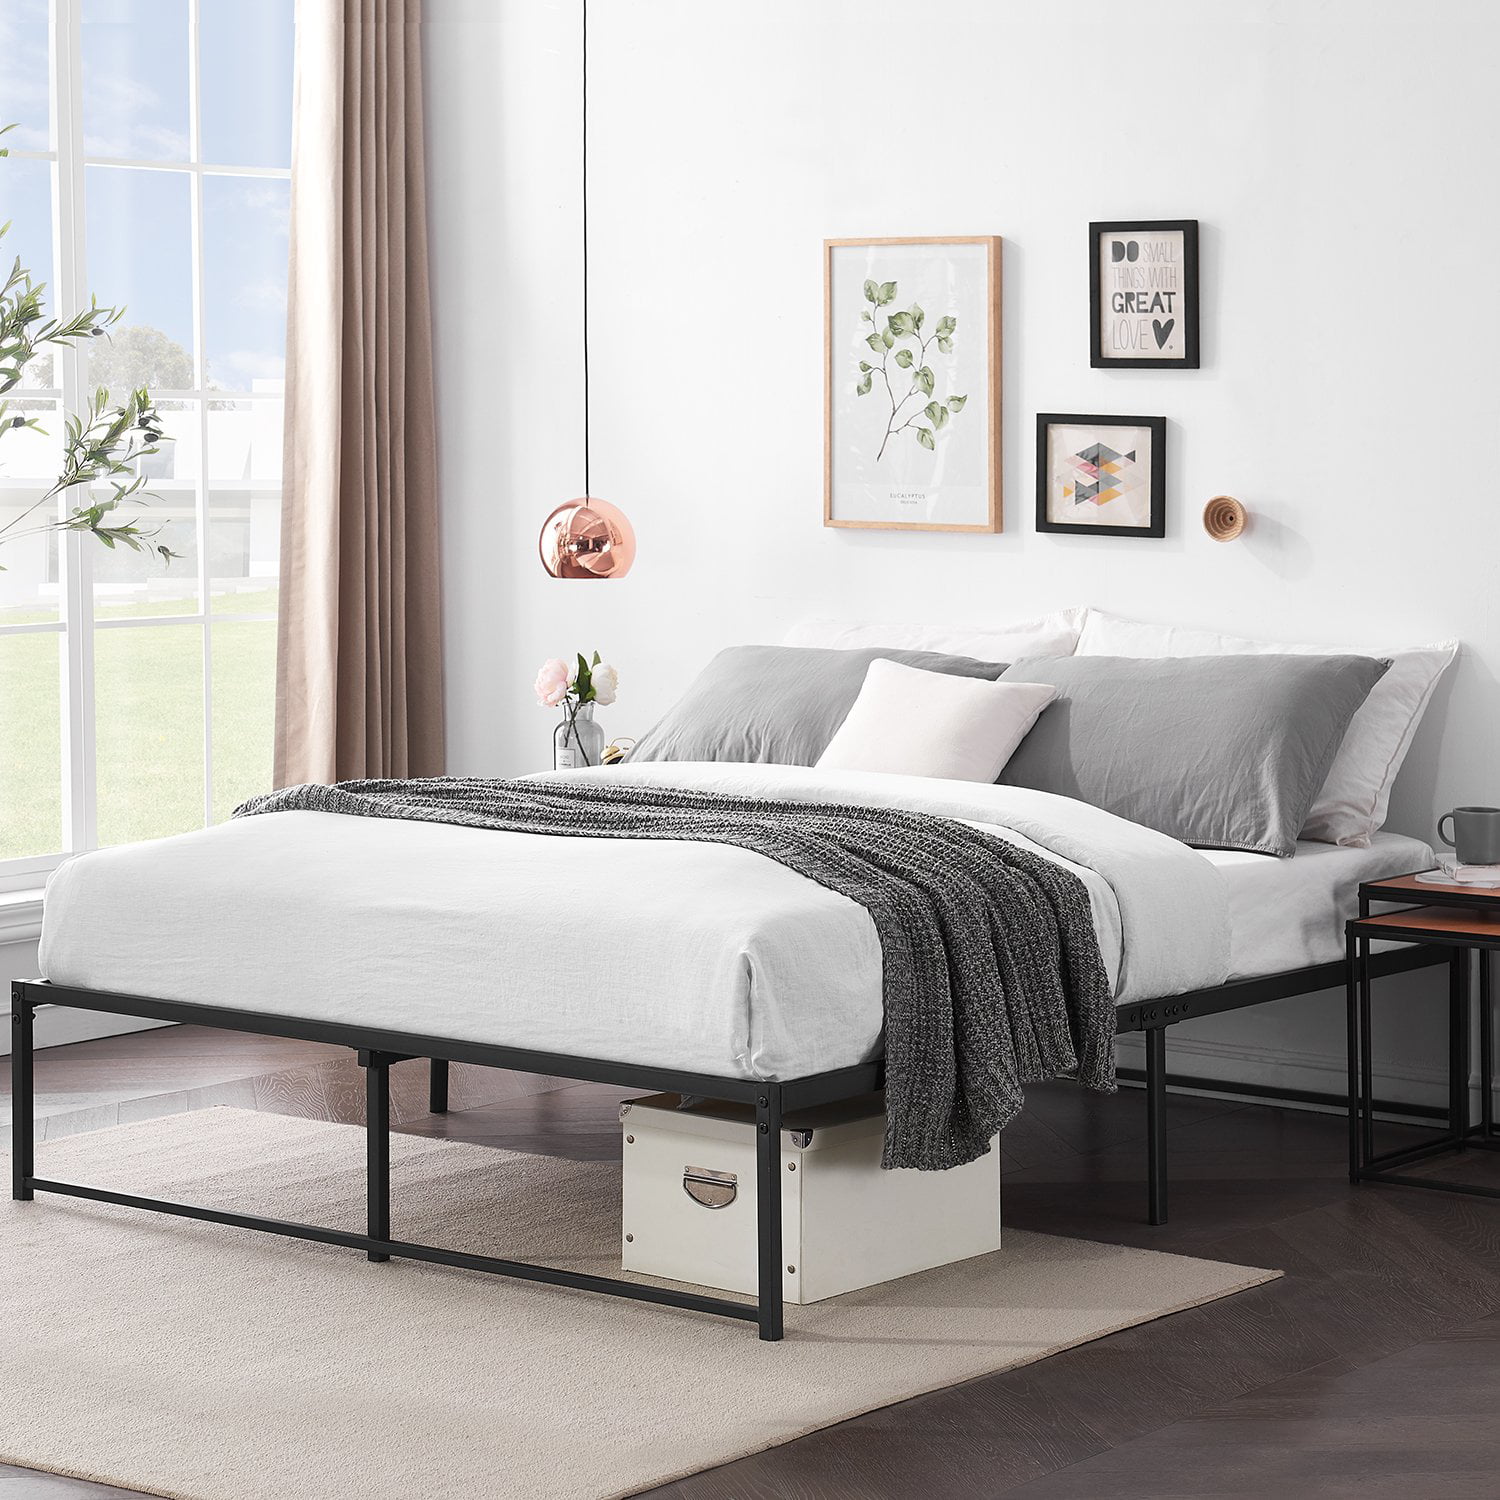 Metal Platform Bed Frame Full Size With, Wood Bed Frame No Headboard